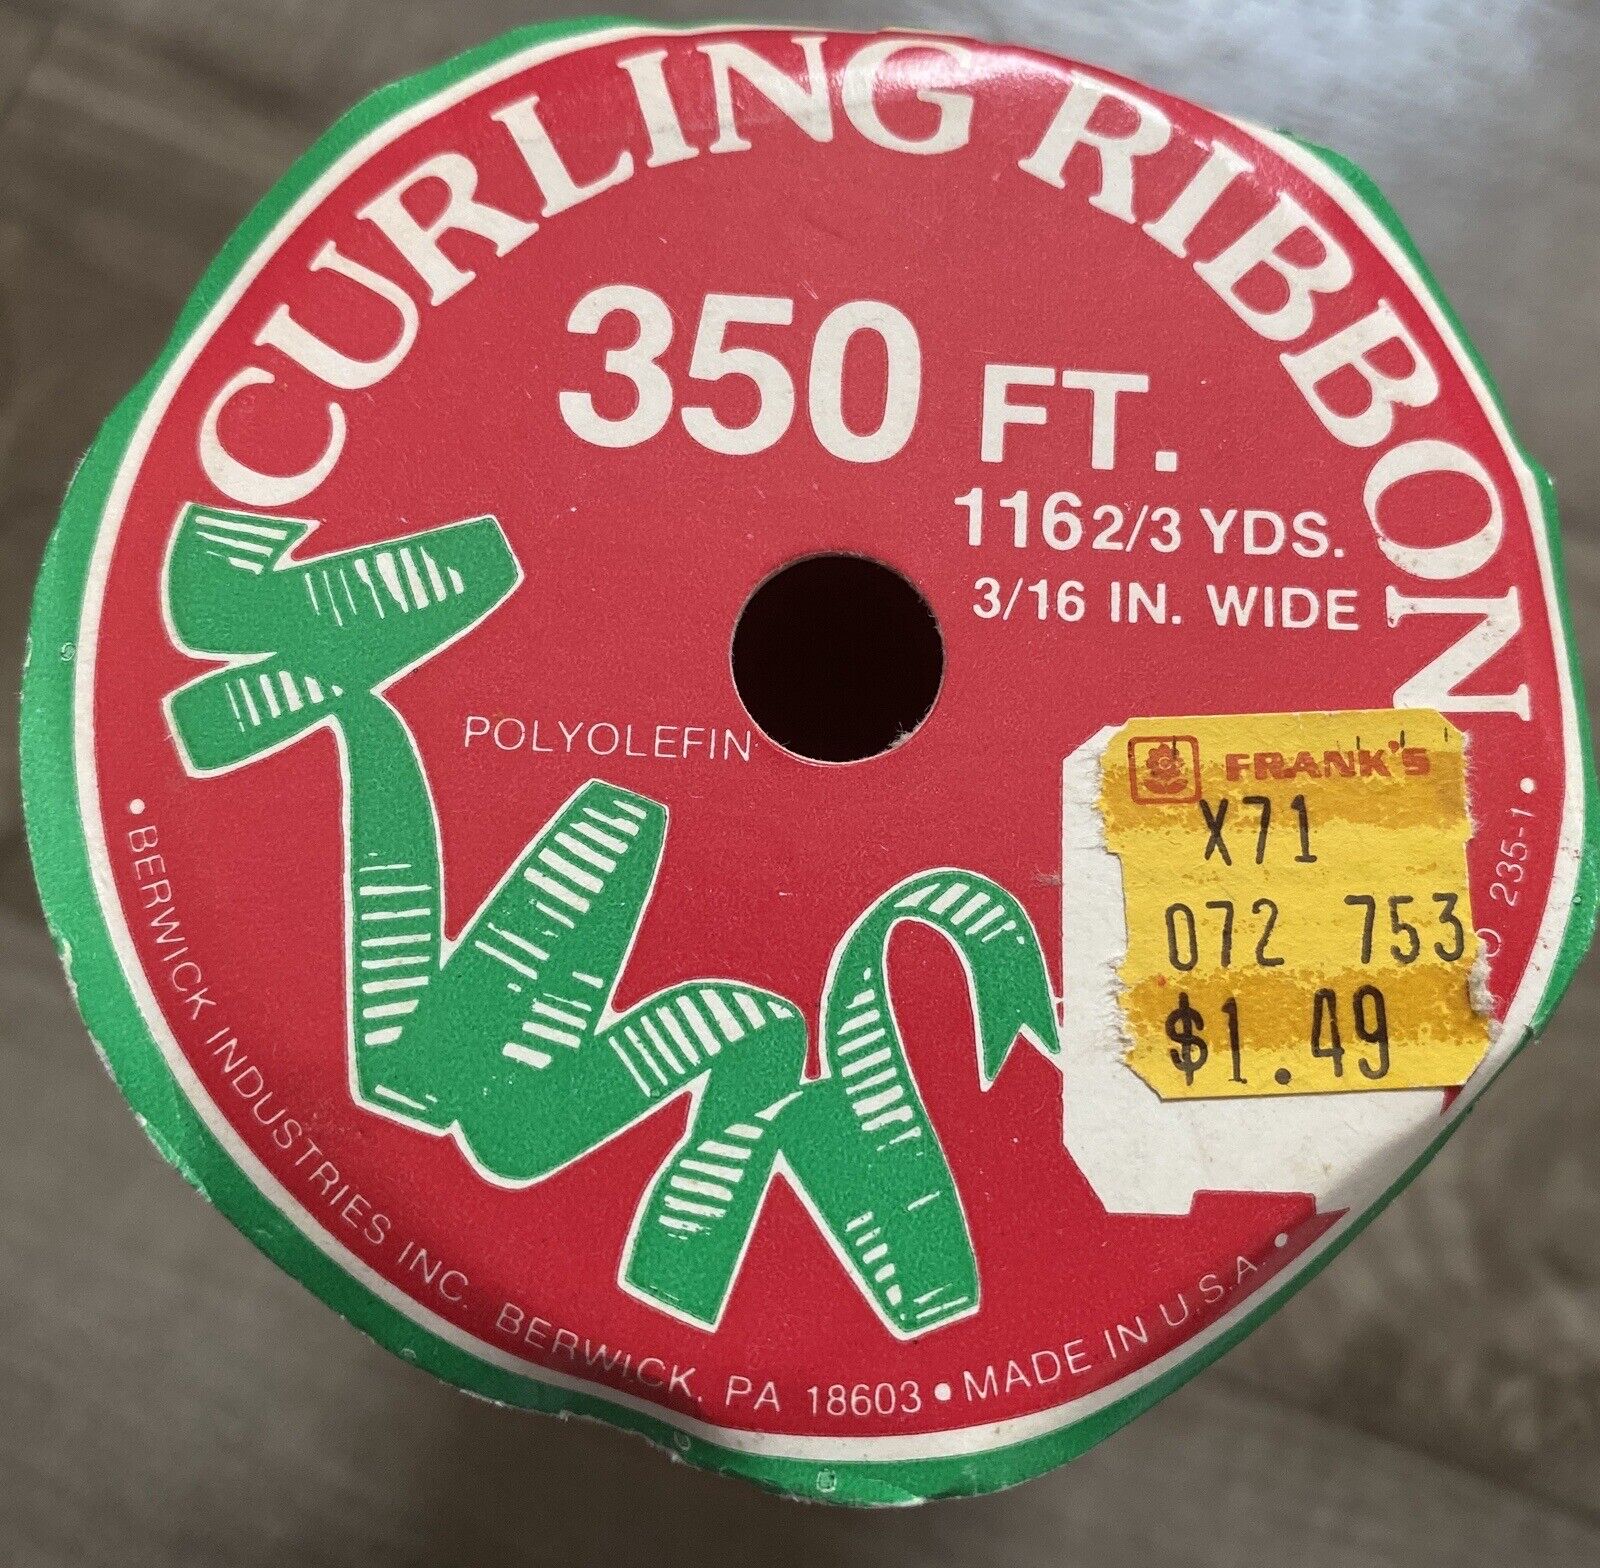 Vintage Curling Ribbon 350 ft 3/16 in wide *FRANK’S NURSERY PRICE STICKER*